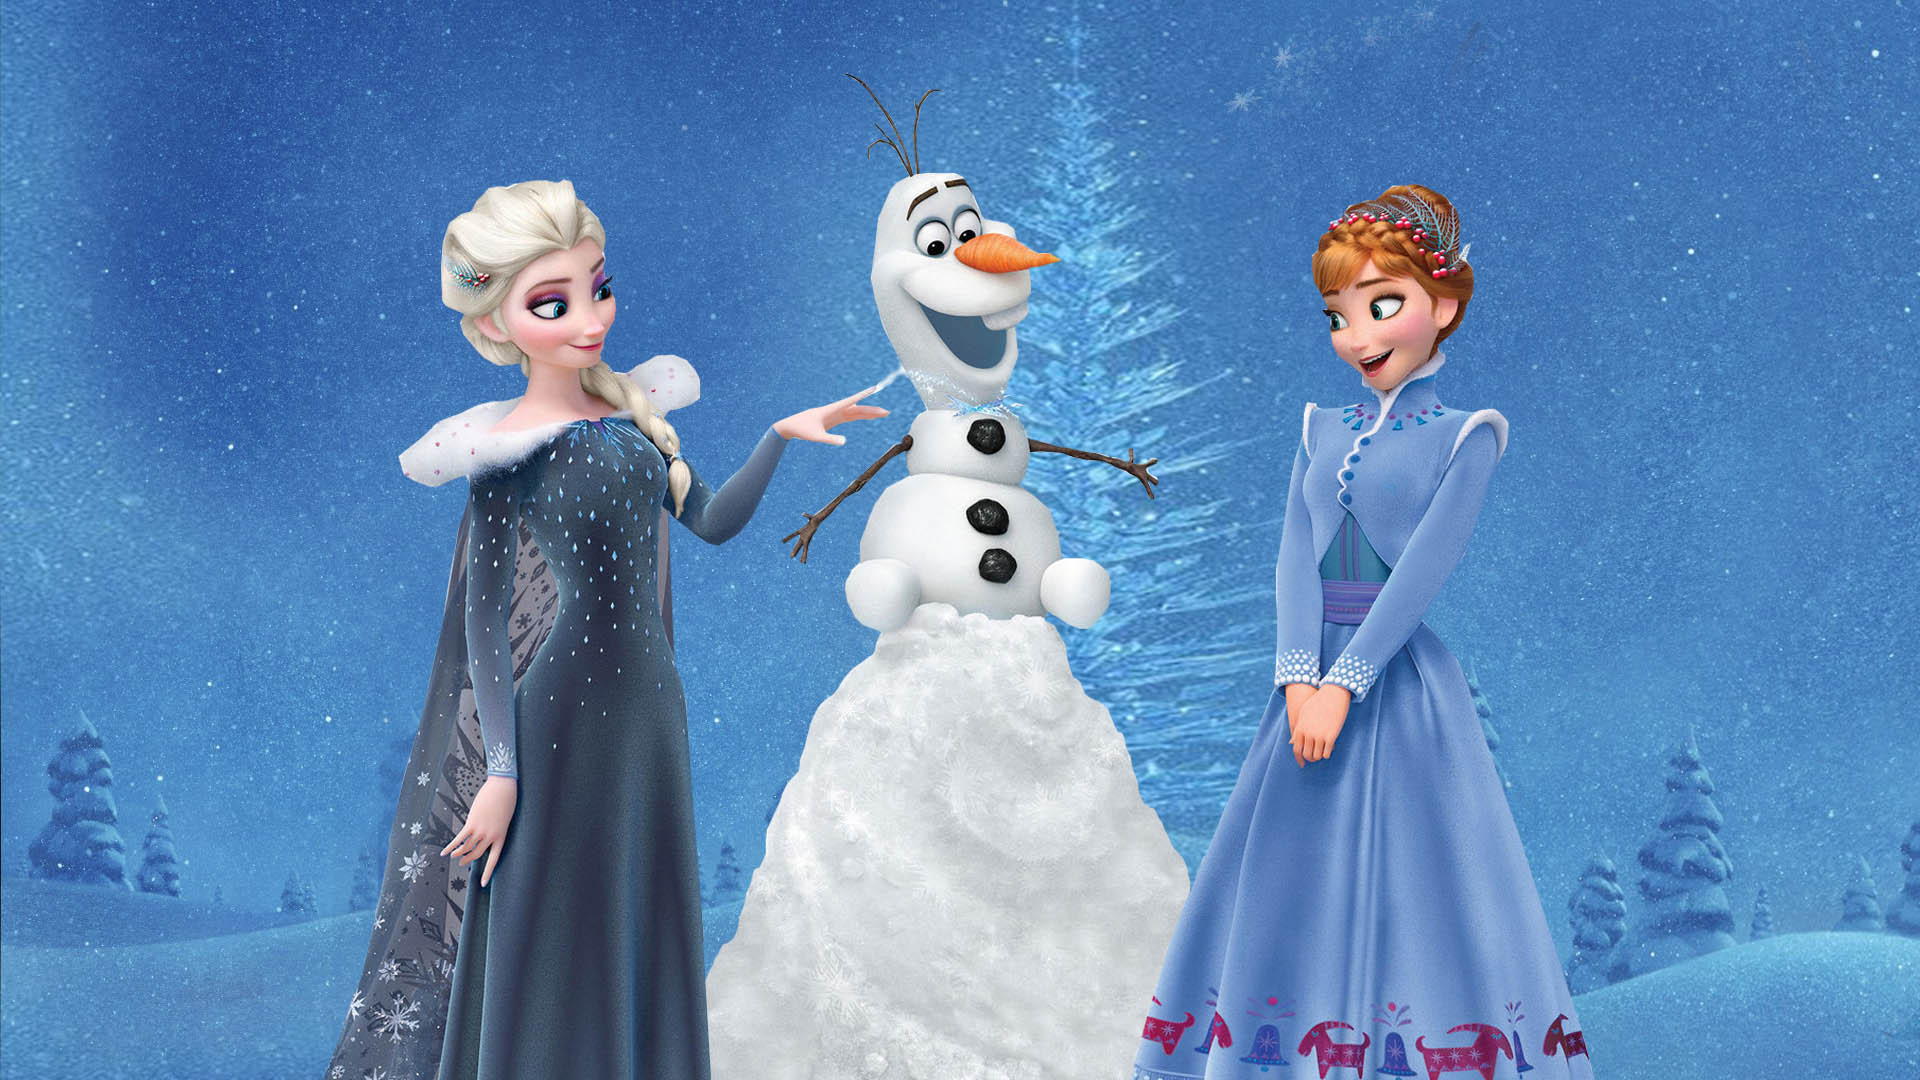 Olafs Frozen Adventure Anna Elsa7442912710 - Olafs Frozen Adventure Anna Elsa - Showman, Olafs, Frozen, Elsa, Anna, Adventure